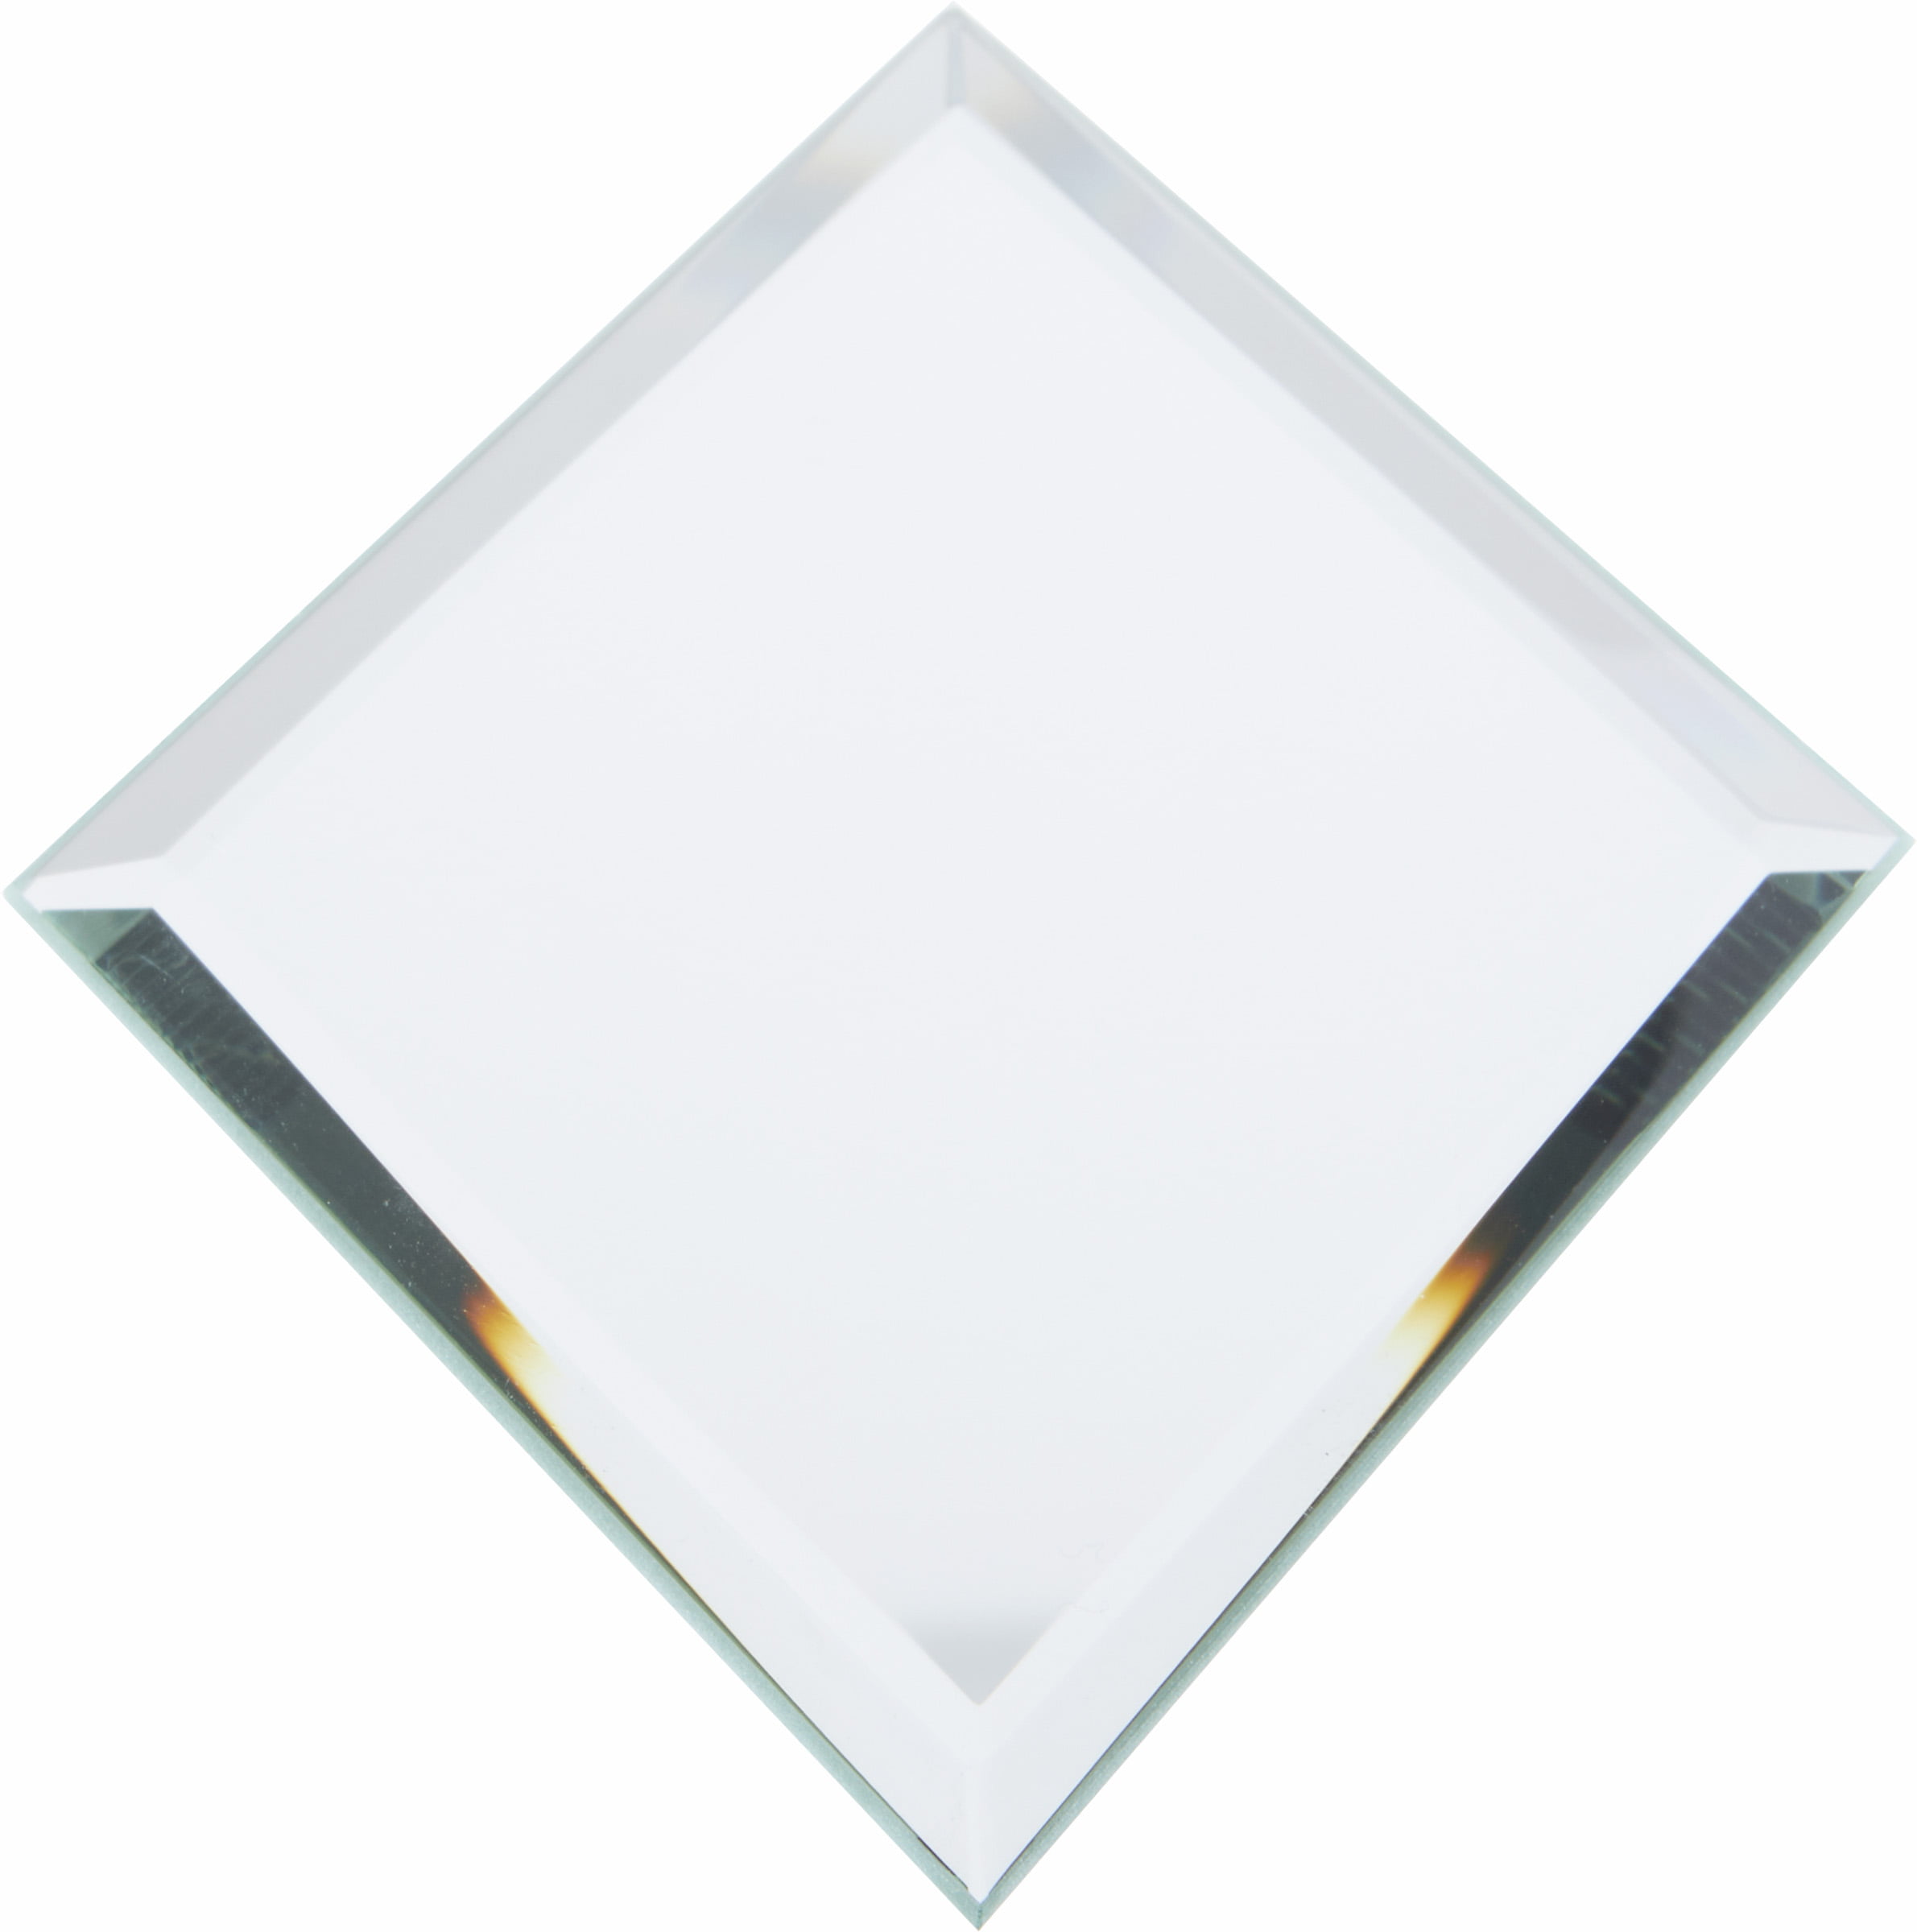 5 inch x 7 inch Plymor Oval 3mm Beveled Glass Mirror 